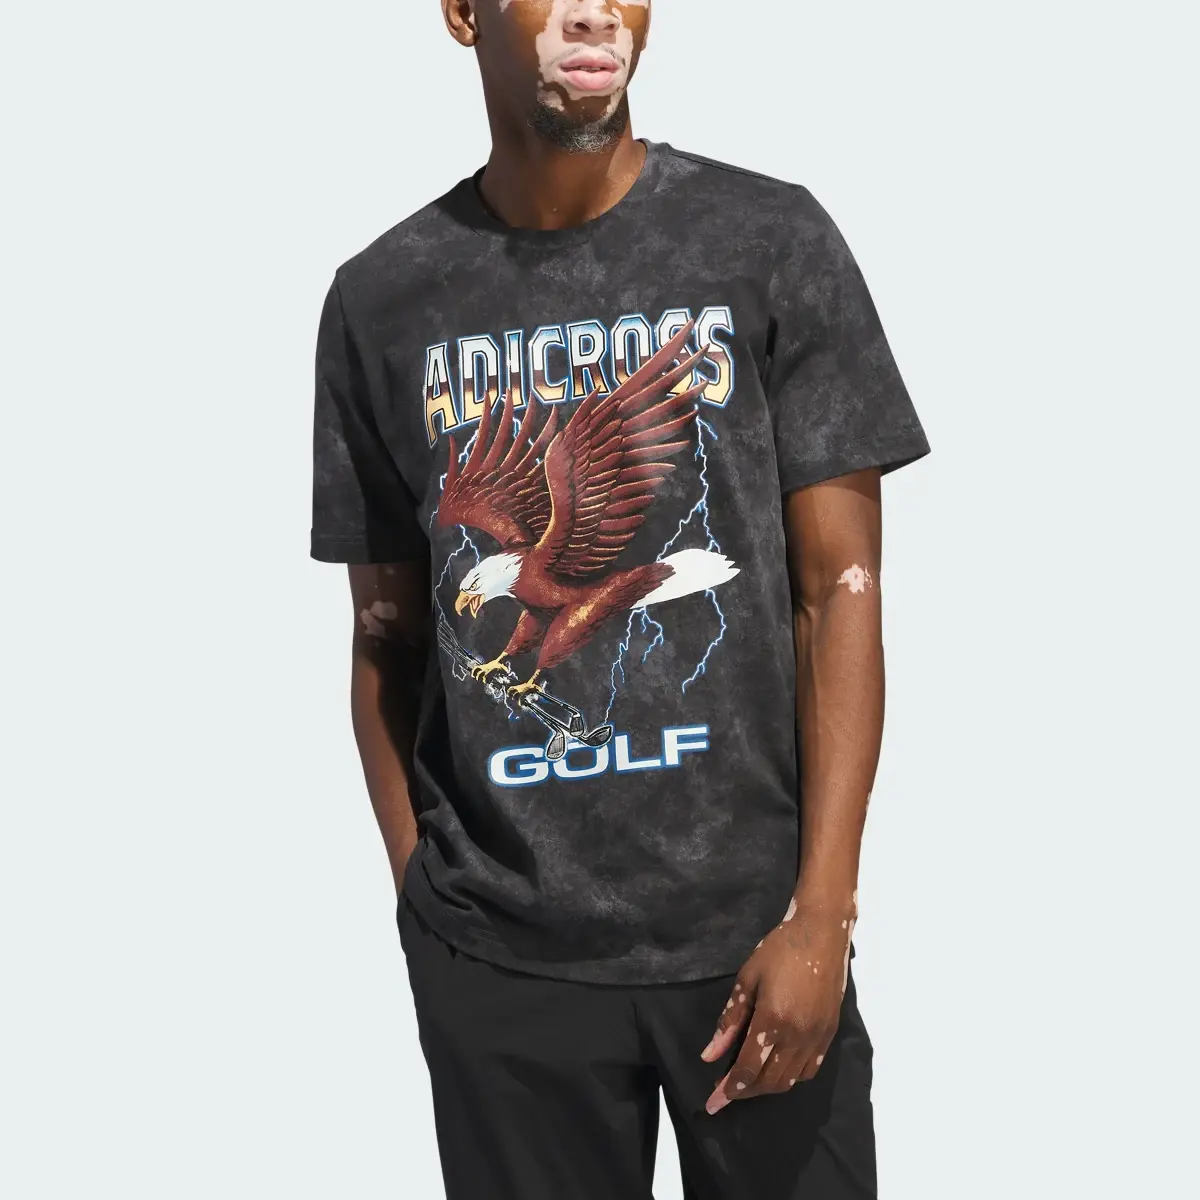 Adidas T-shirt adicross Eagle Graphic. 1